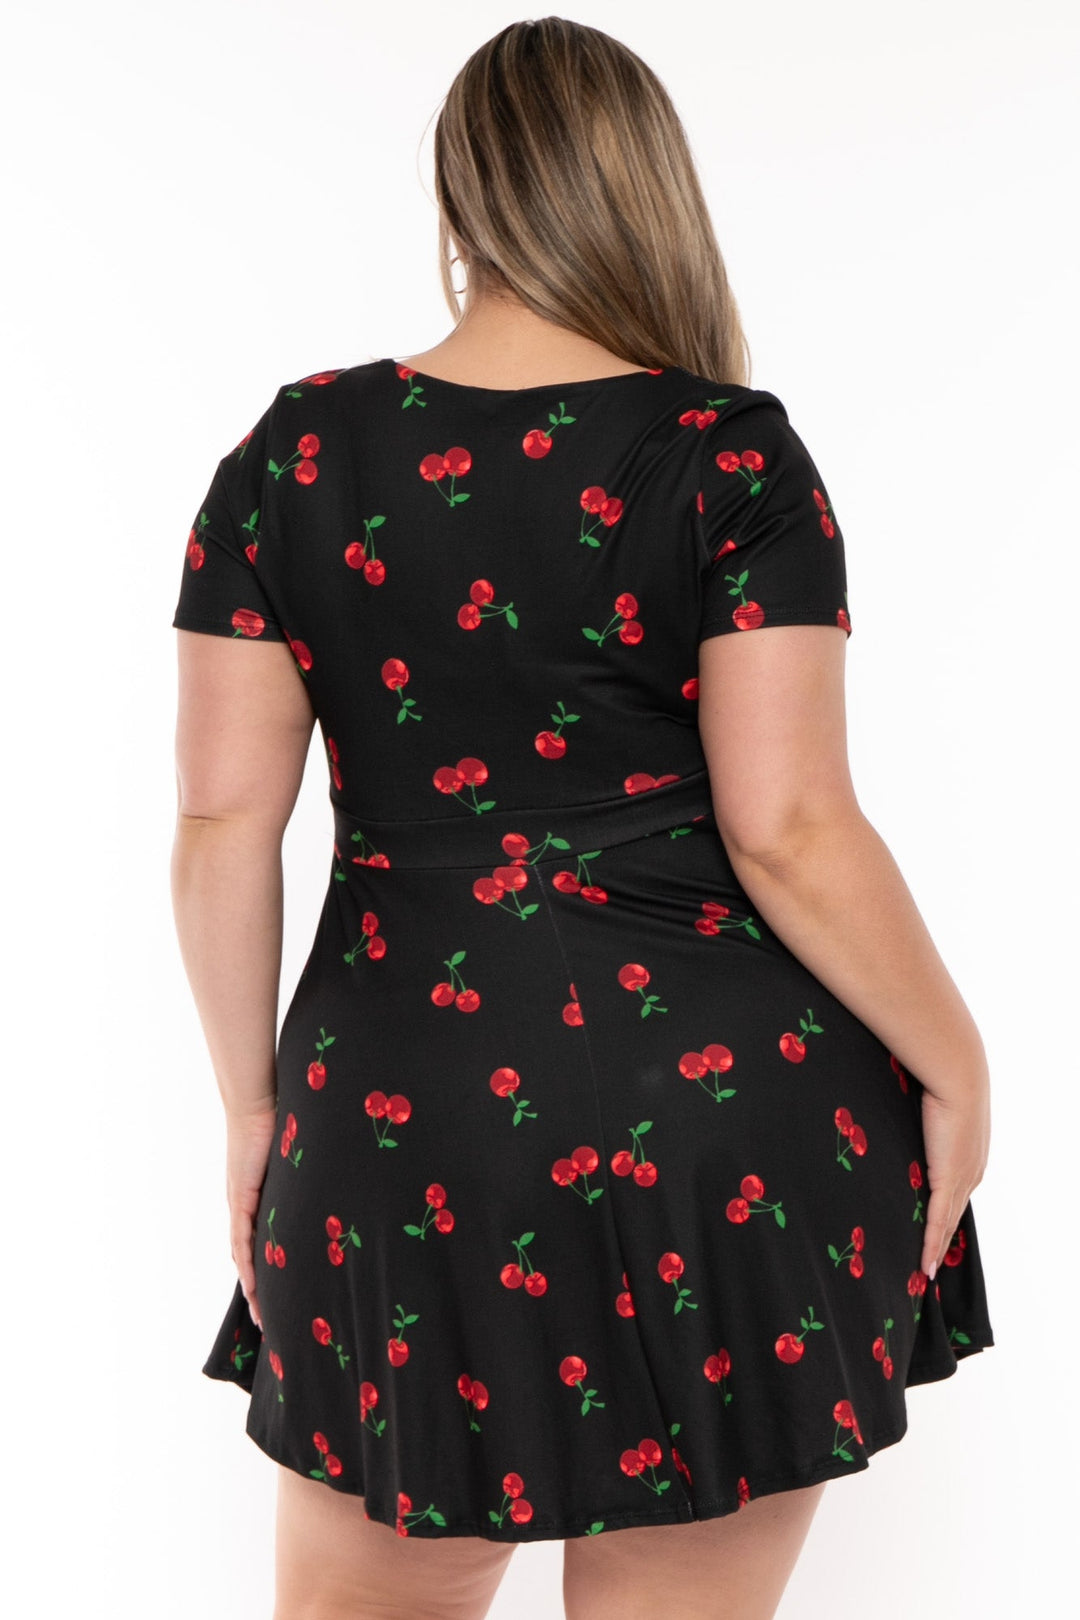 Curvy Sense Dresses Plus Size Jayne Cherry Flare Dress - Black